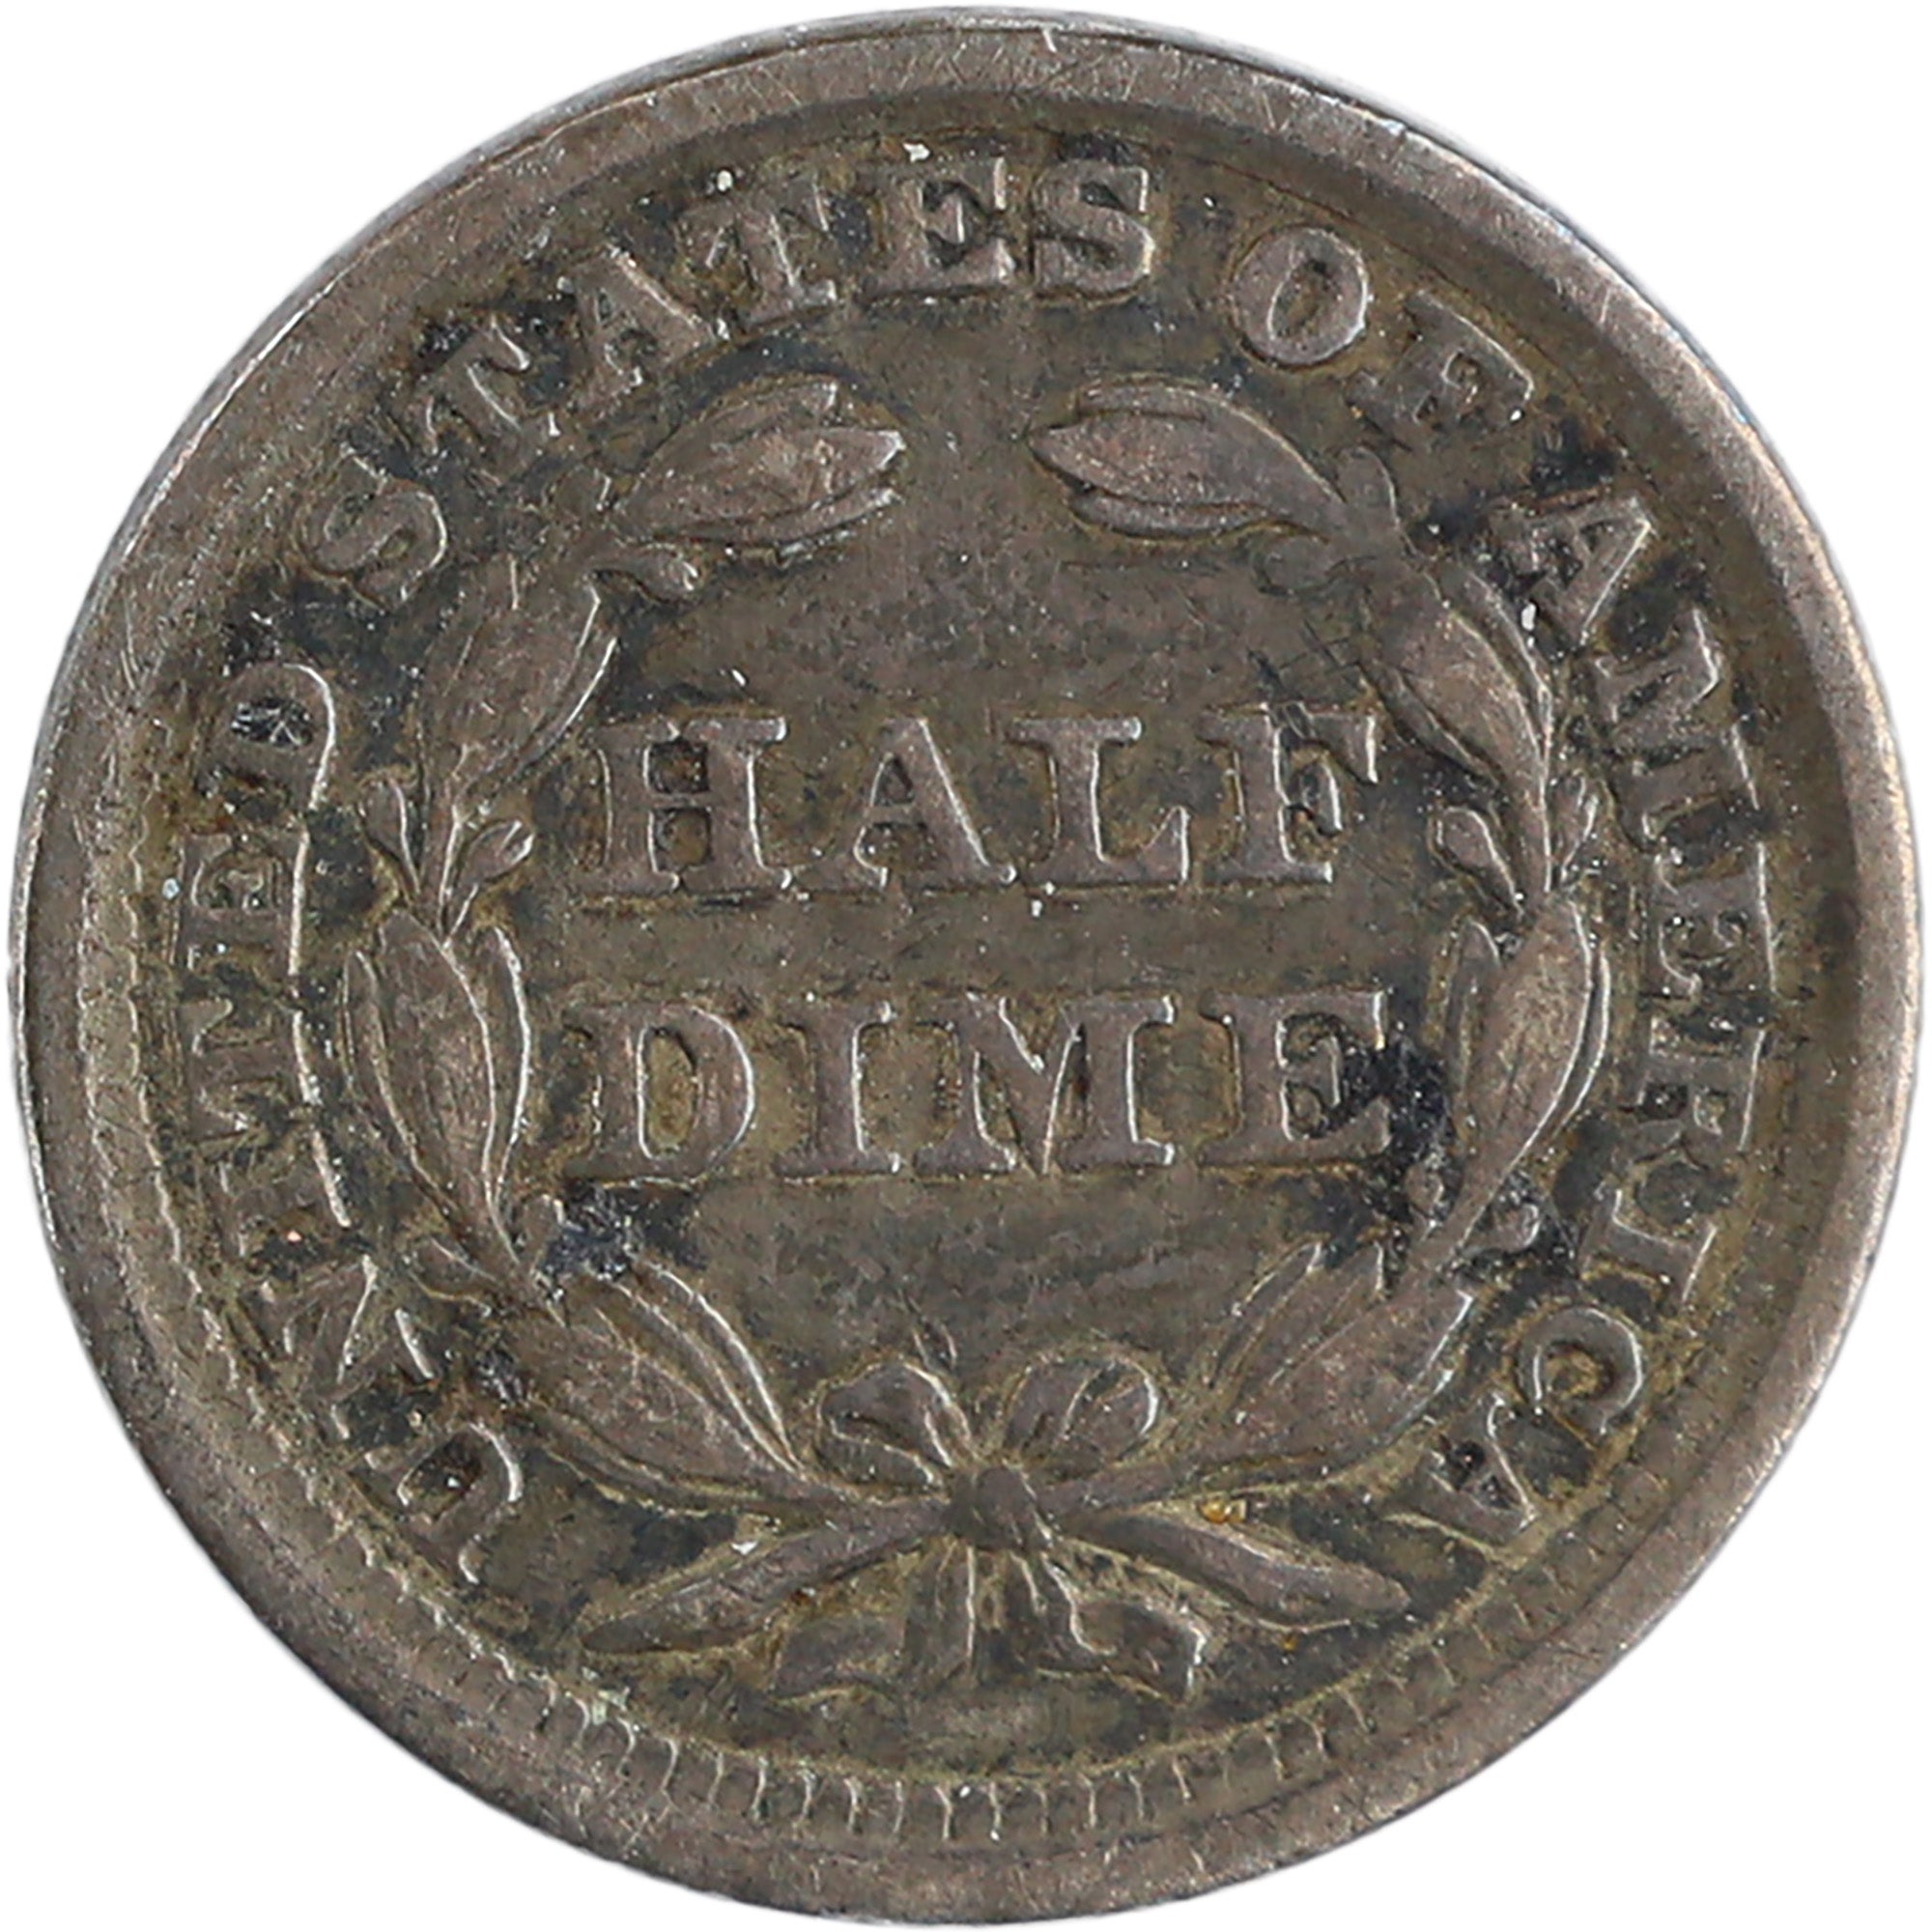 1858 Seated Liberty Half Dime VF Very Fine Silver 5c Coin SKU:I11951